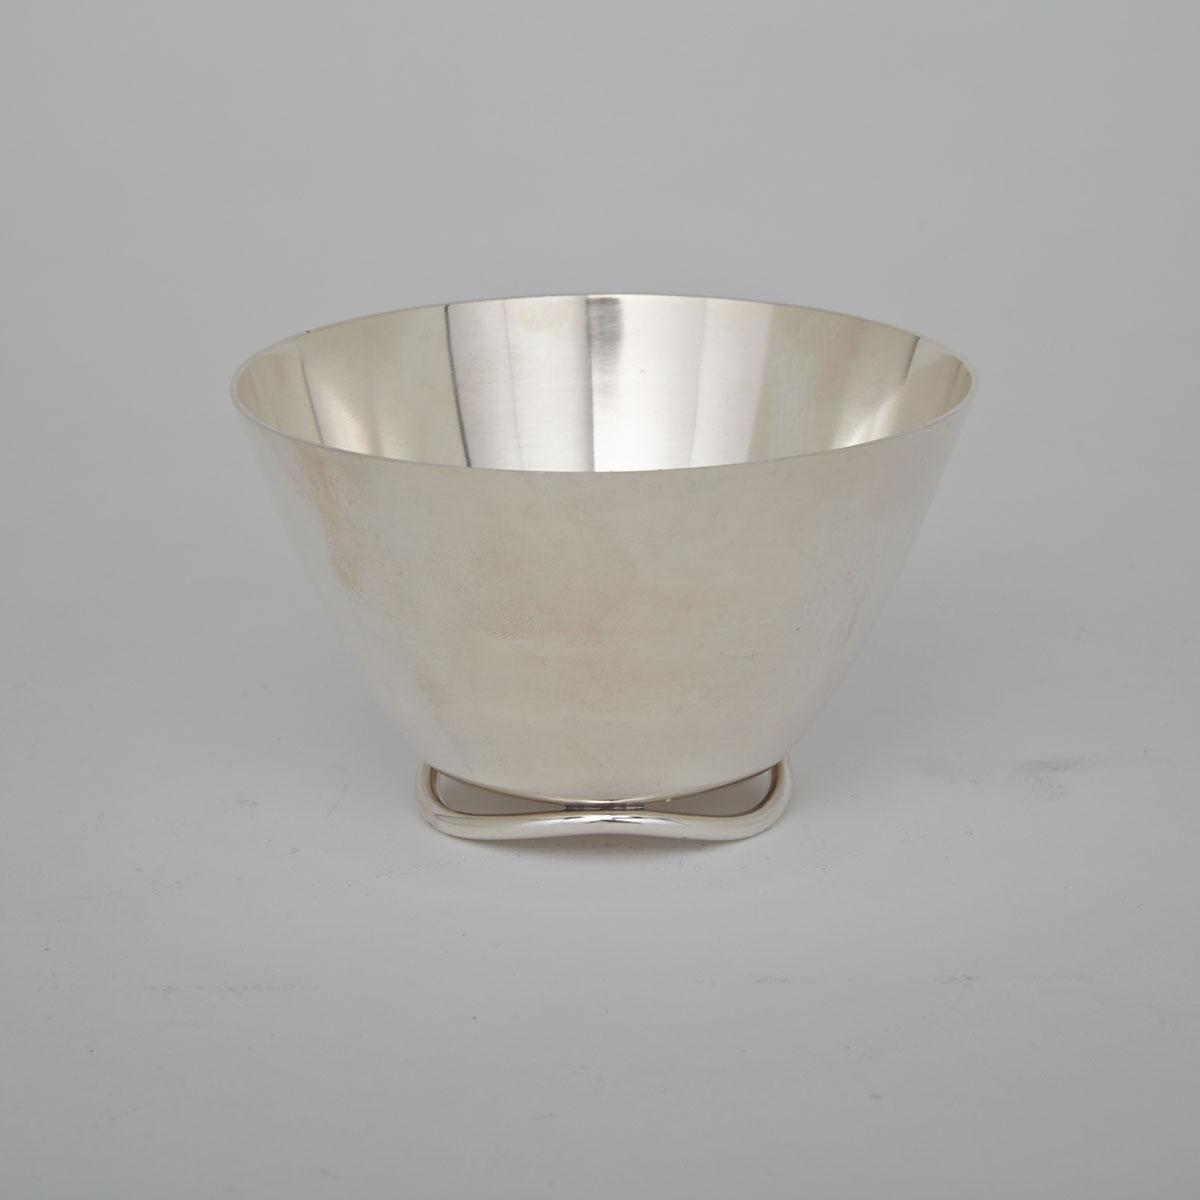 Danish Silver Small Bowl, Svend Weihrauch for Frantz Hingelberg, Aarhus, mid-20th century